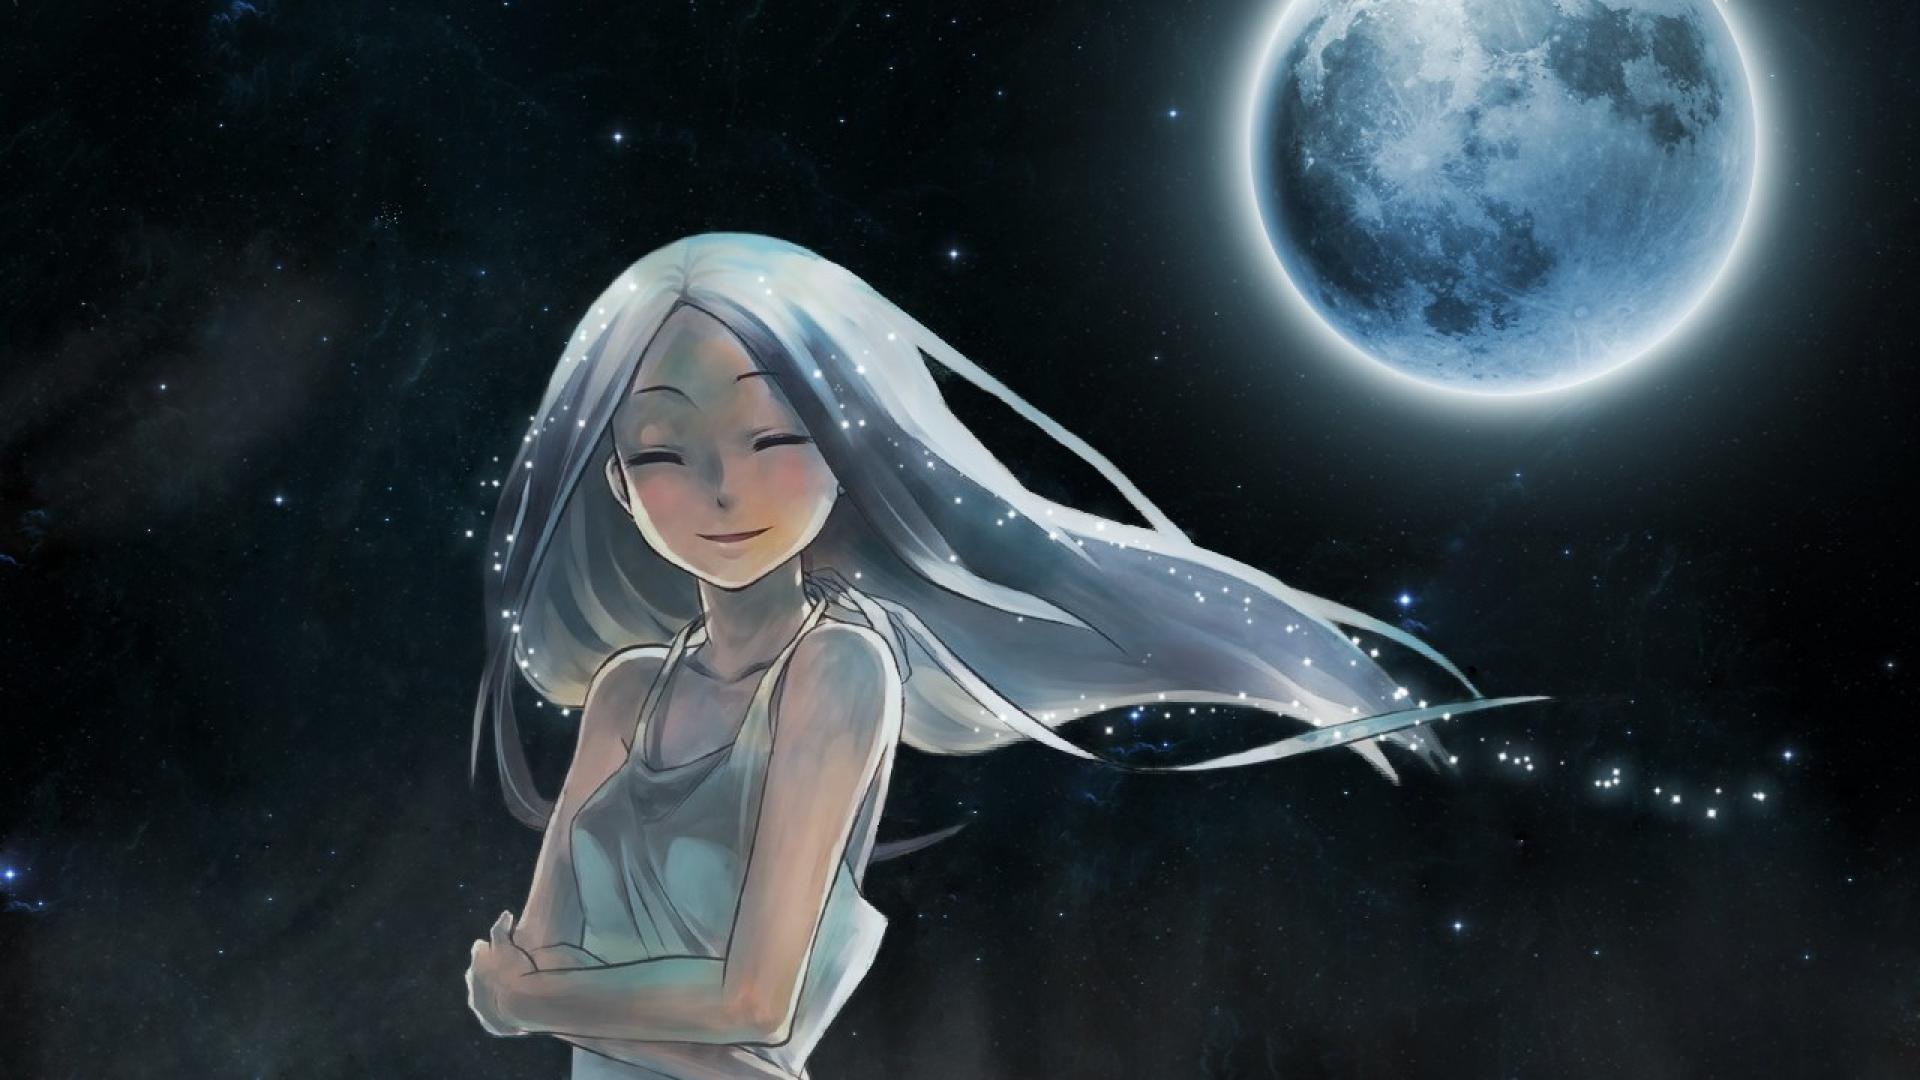 Full moon girl were-woman animation